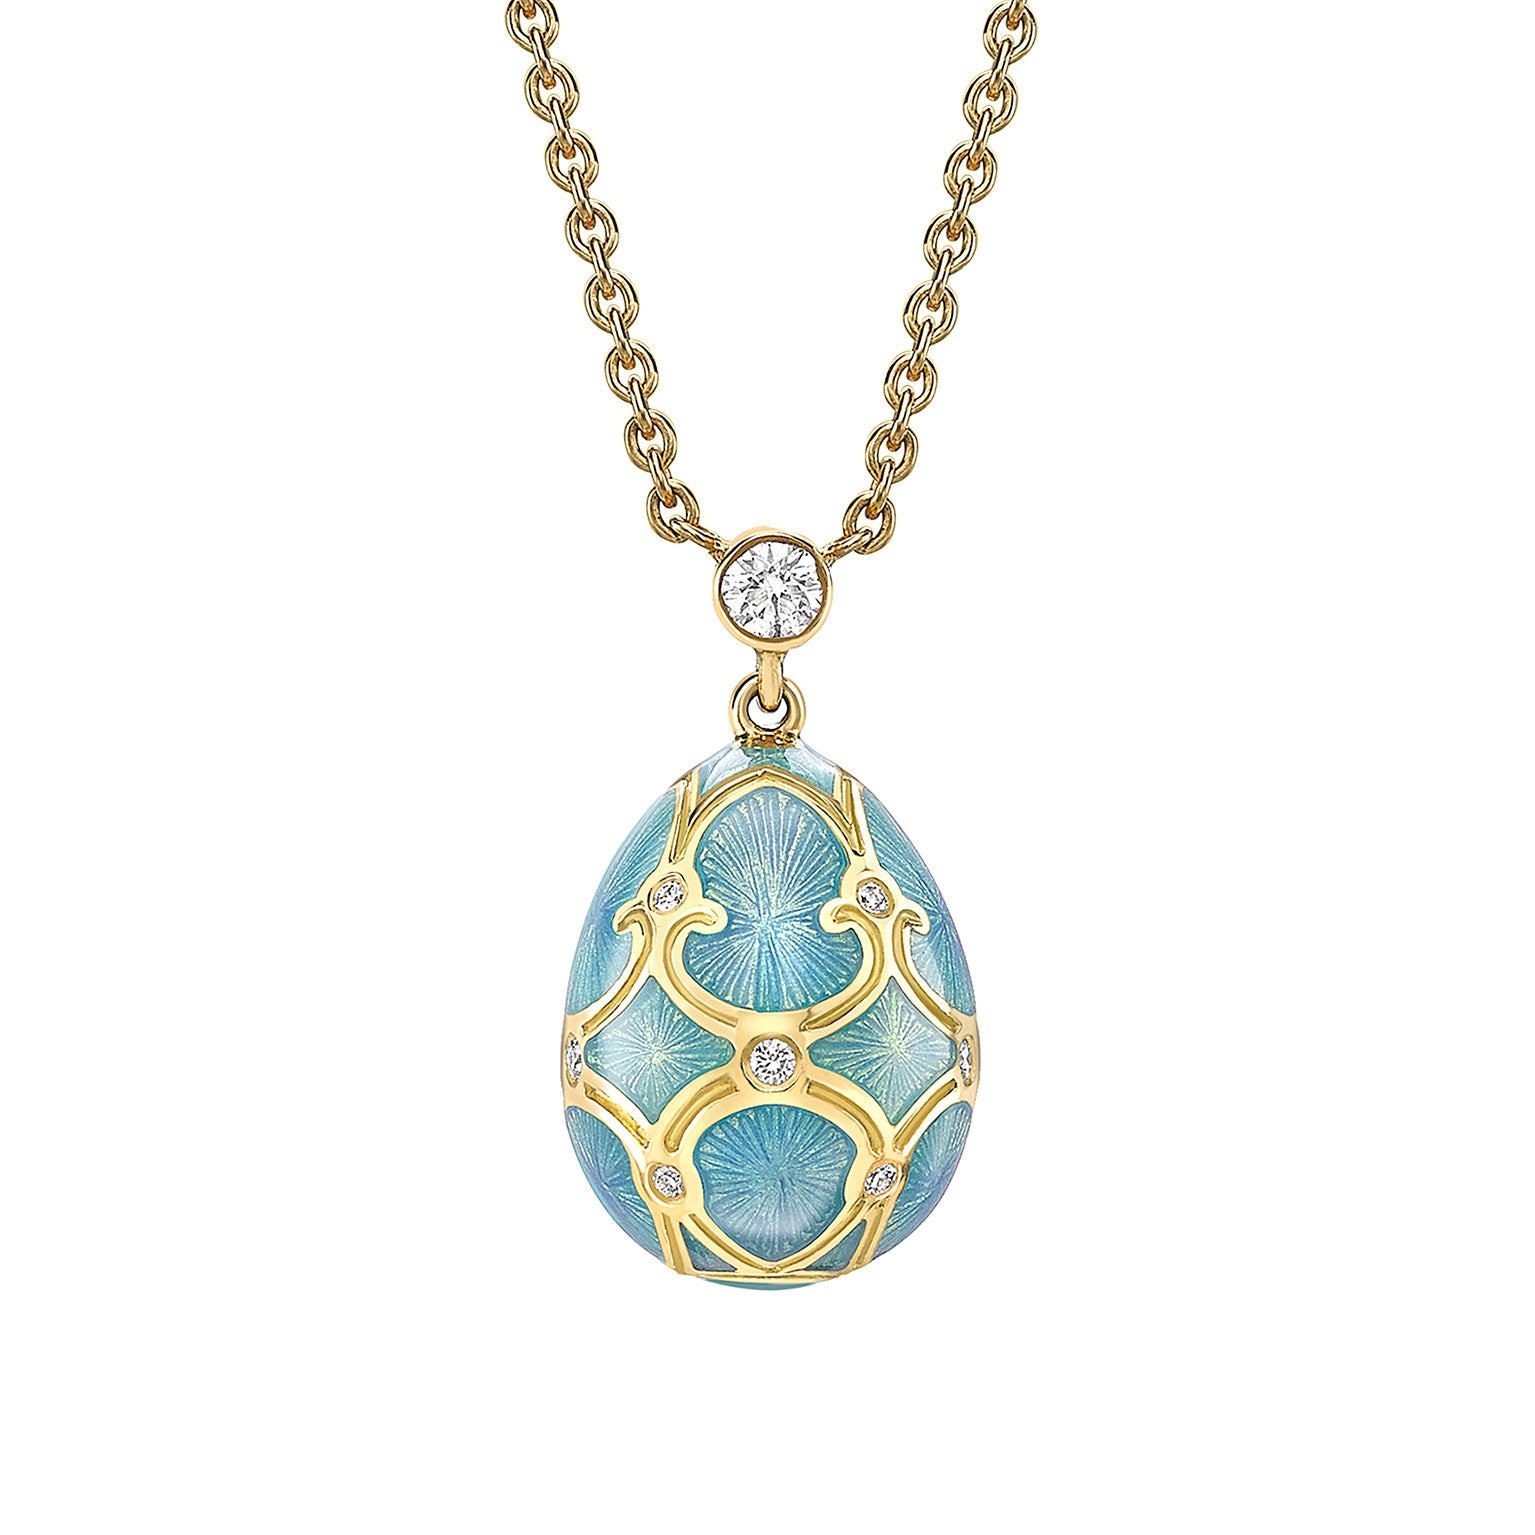 Heritage-Yellow-Gold-Diamond-&-Turquoise-Guilloché-Enamel-Petite-Egg-Pendant